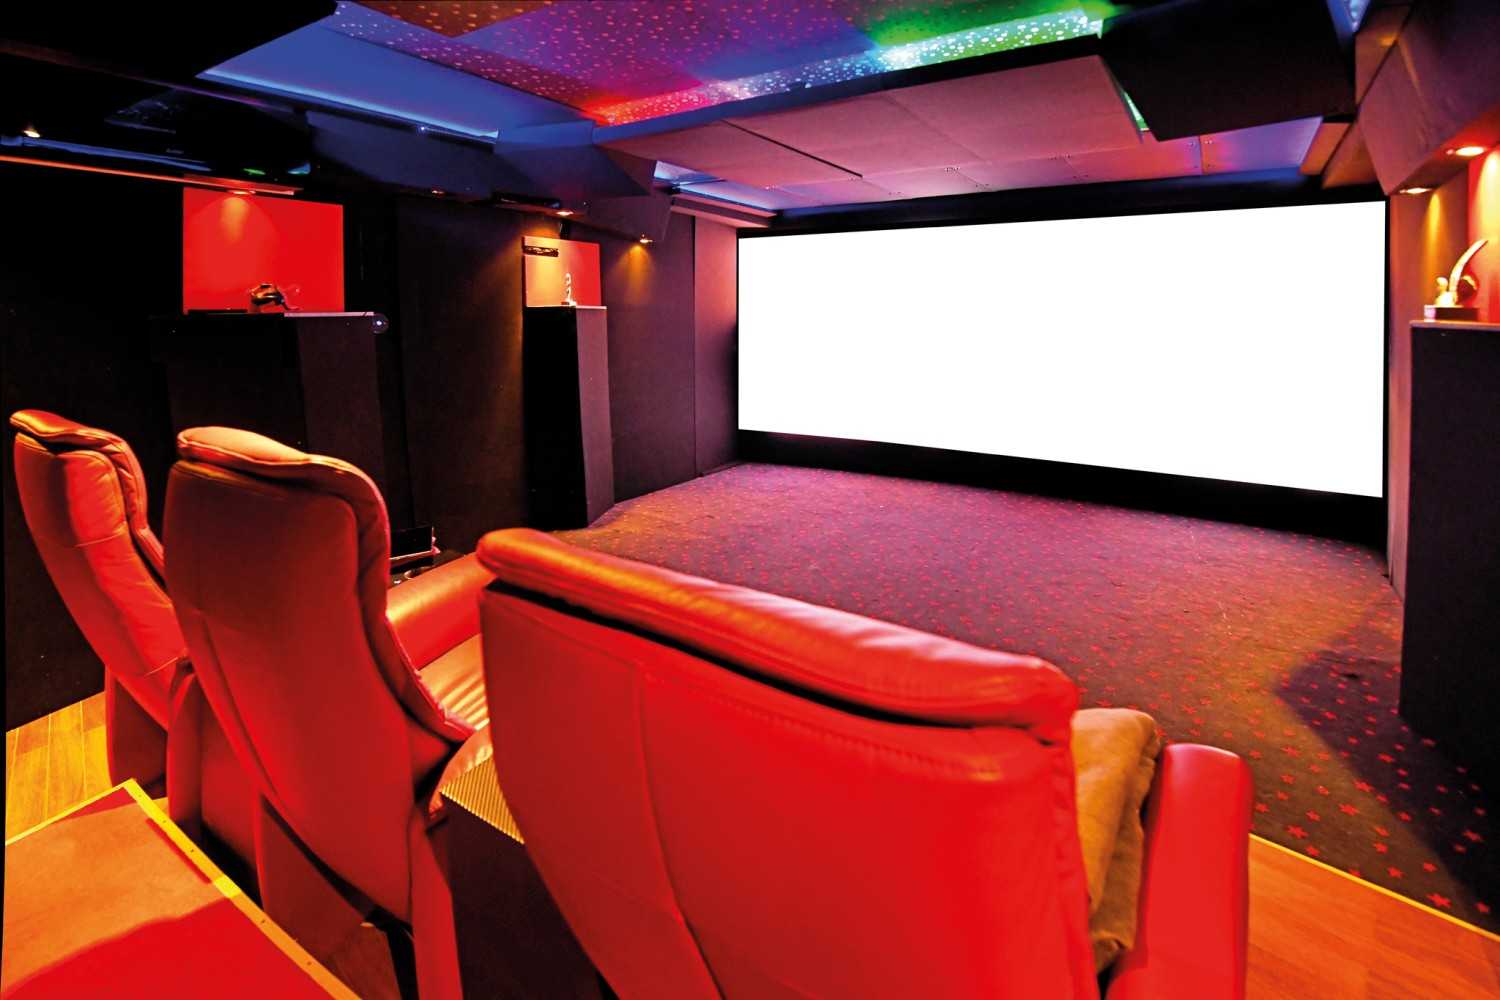 Ratgeber BLUE LINE CINEMA: Beeindruckendes 9.1.4-Dolby-Atmos-Kino mit Profi -Projektor - News, Bild 1